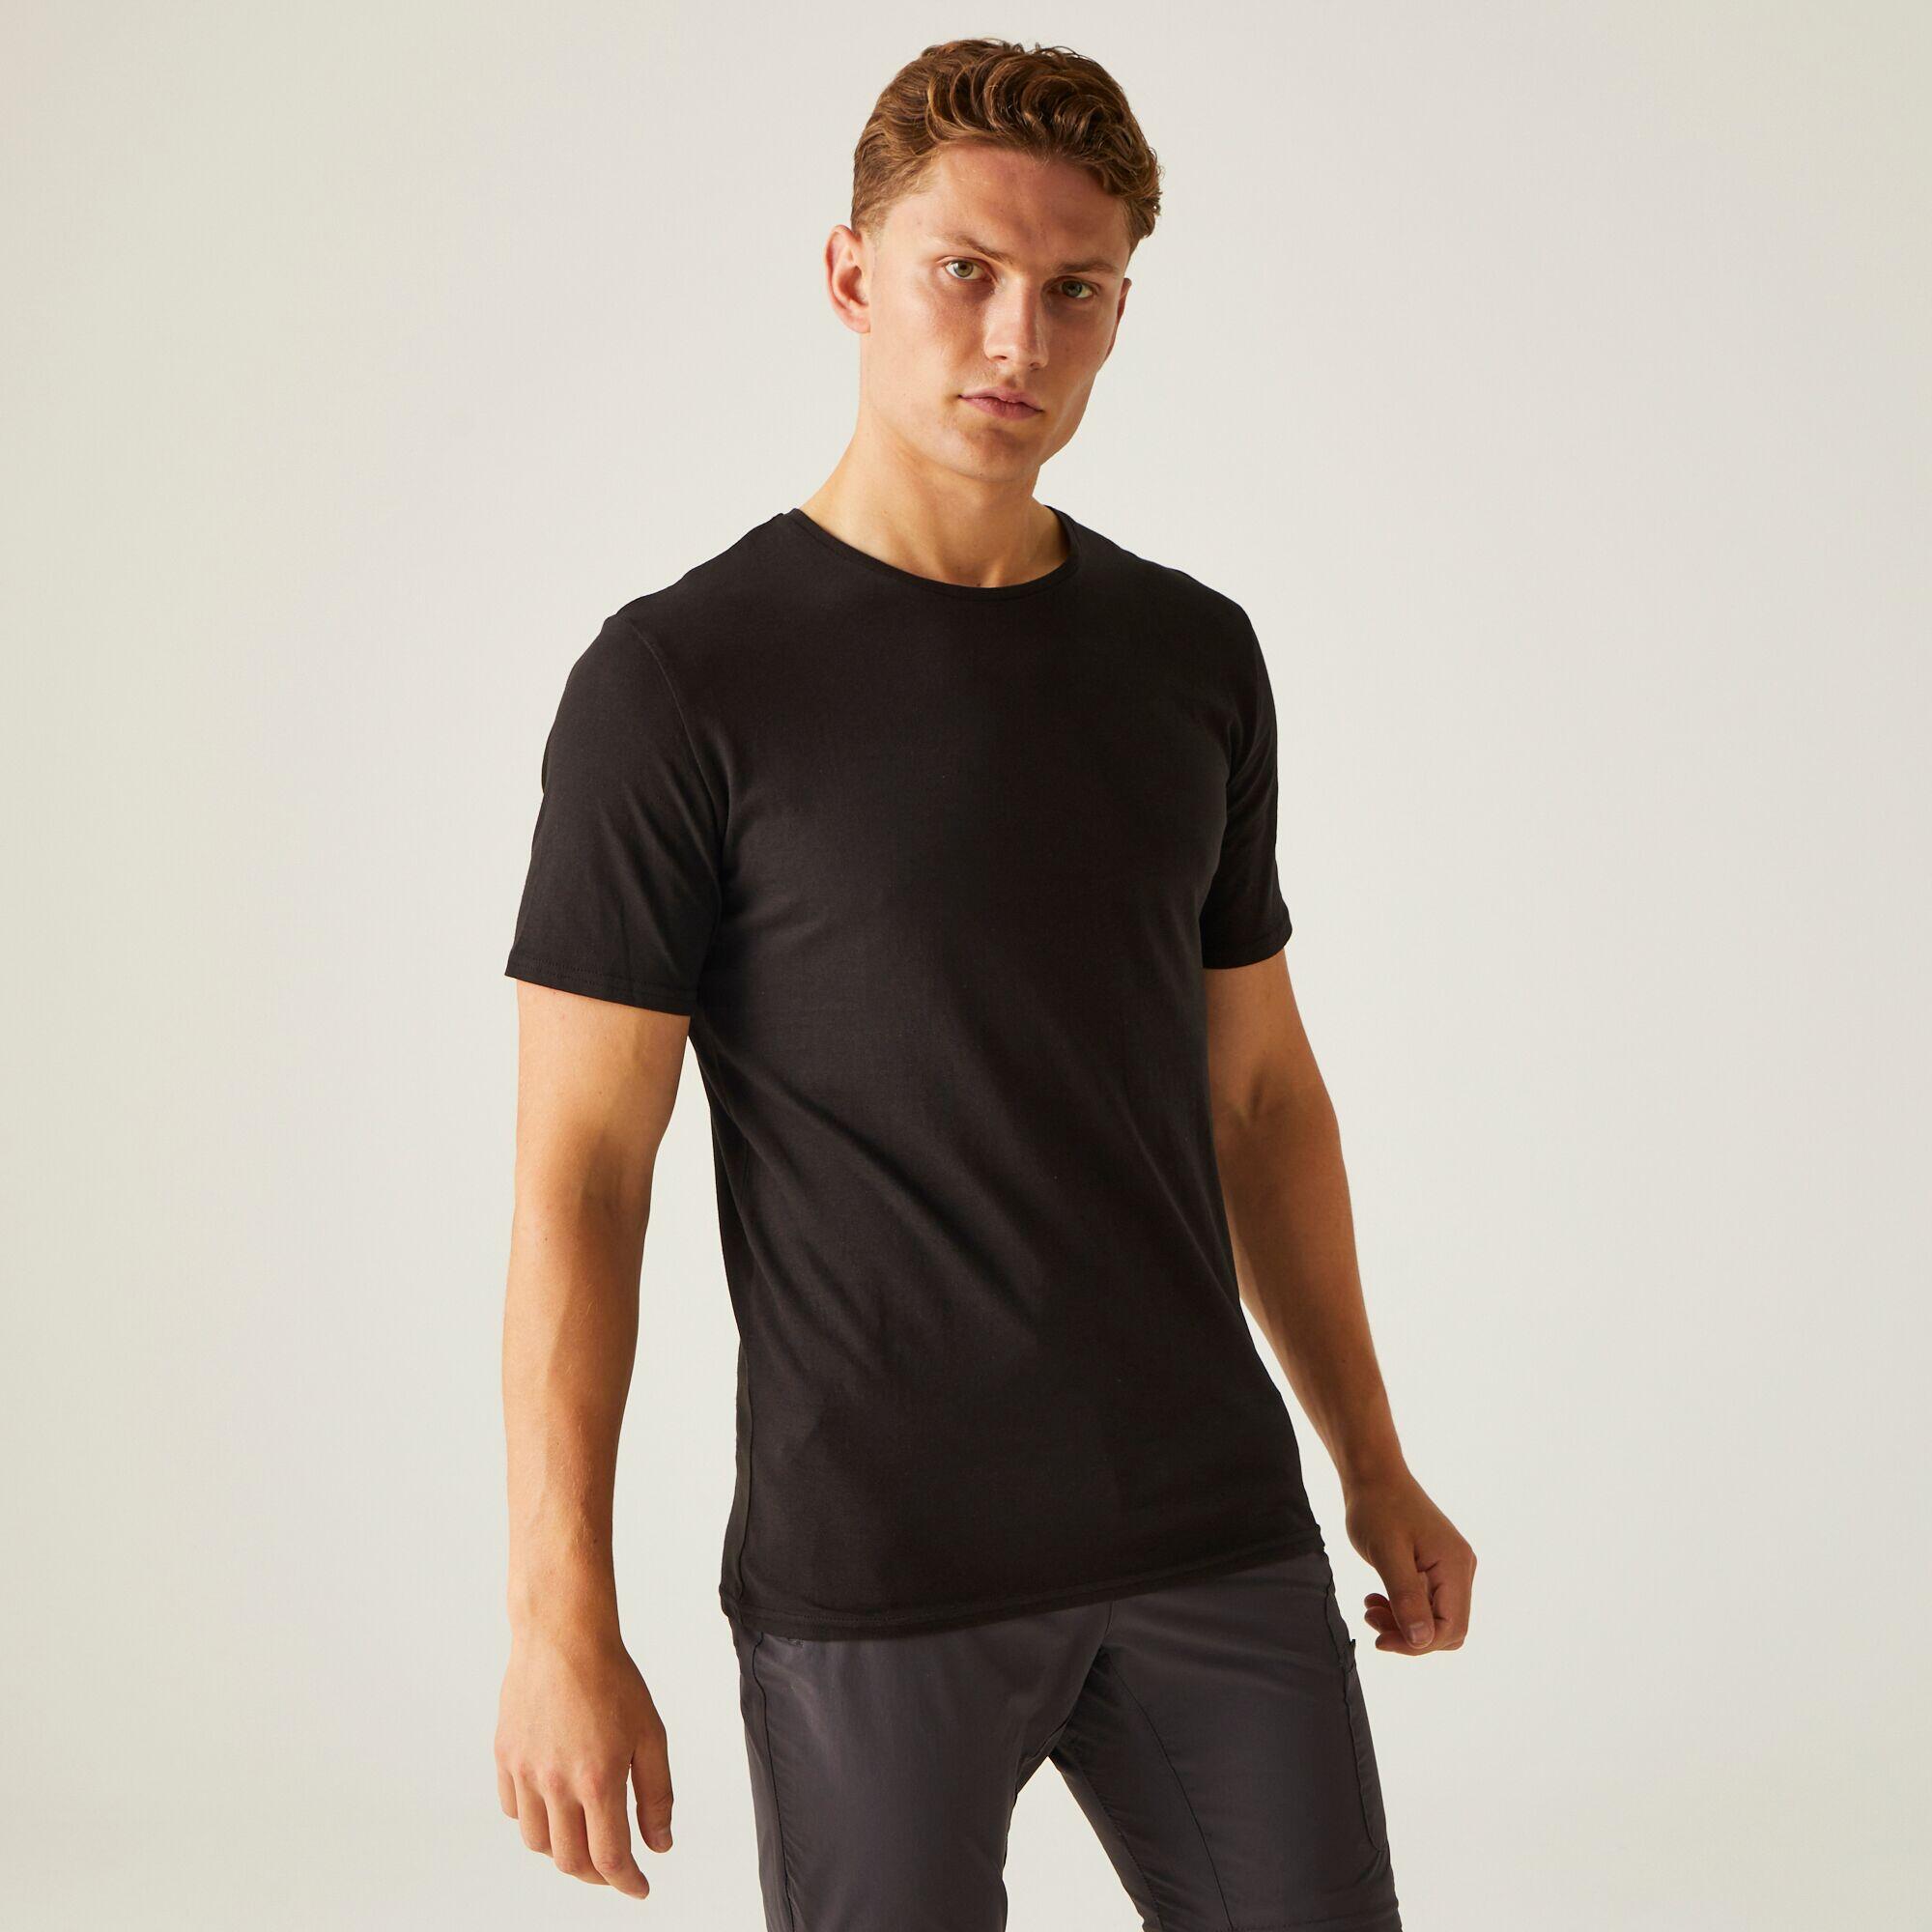 Tait Men's Walking Short Sleeve T-Shirt - Black 1/5